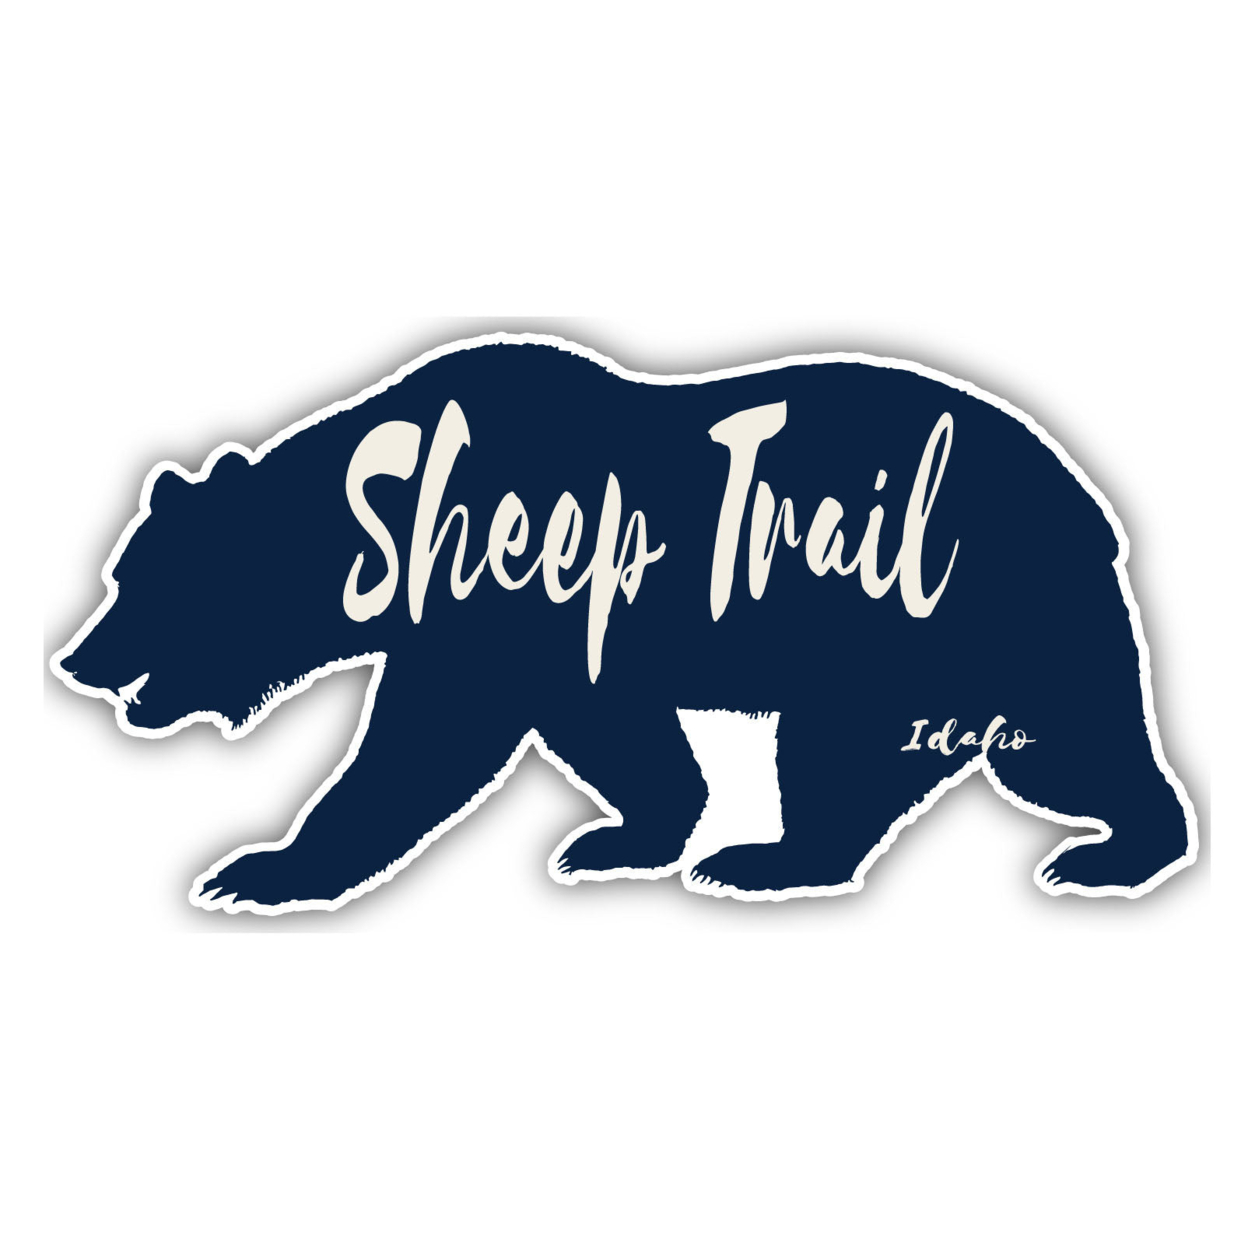 Sheep Trail Idaho Souvenir Decorative Stickers (Choose Theme And Size) - Single Unit, 2-Inch, Bear